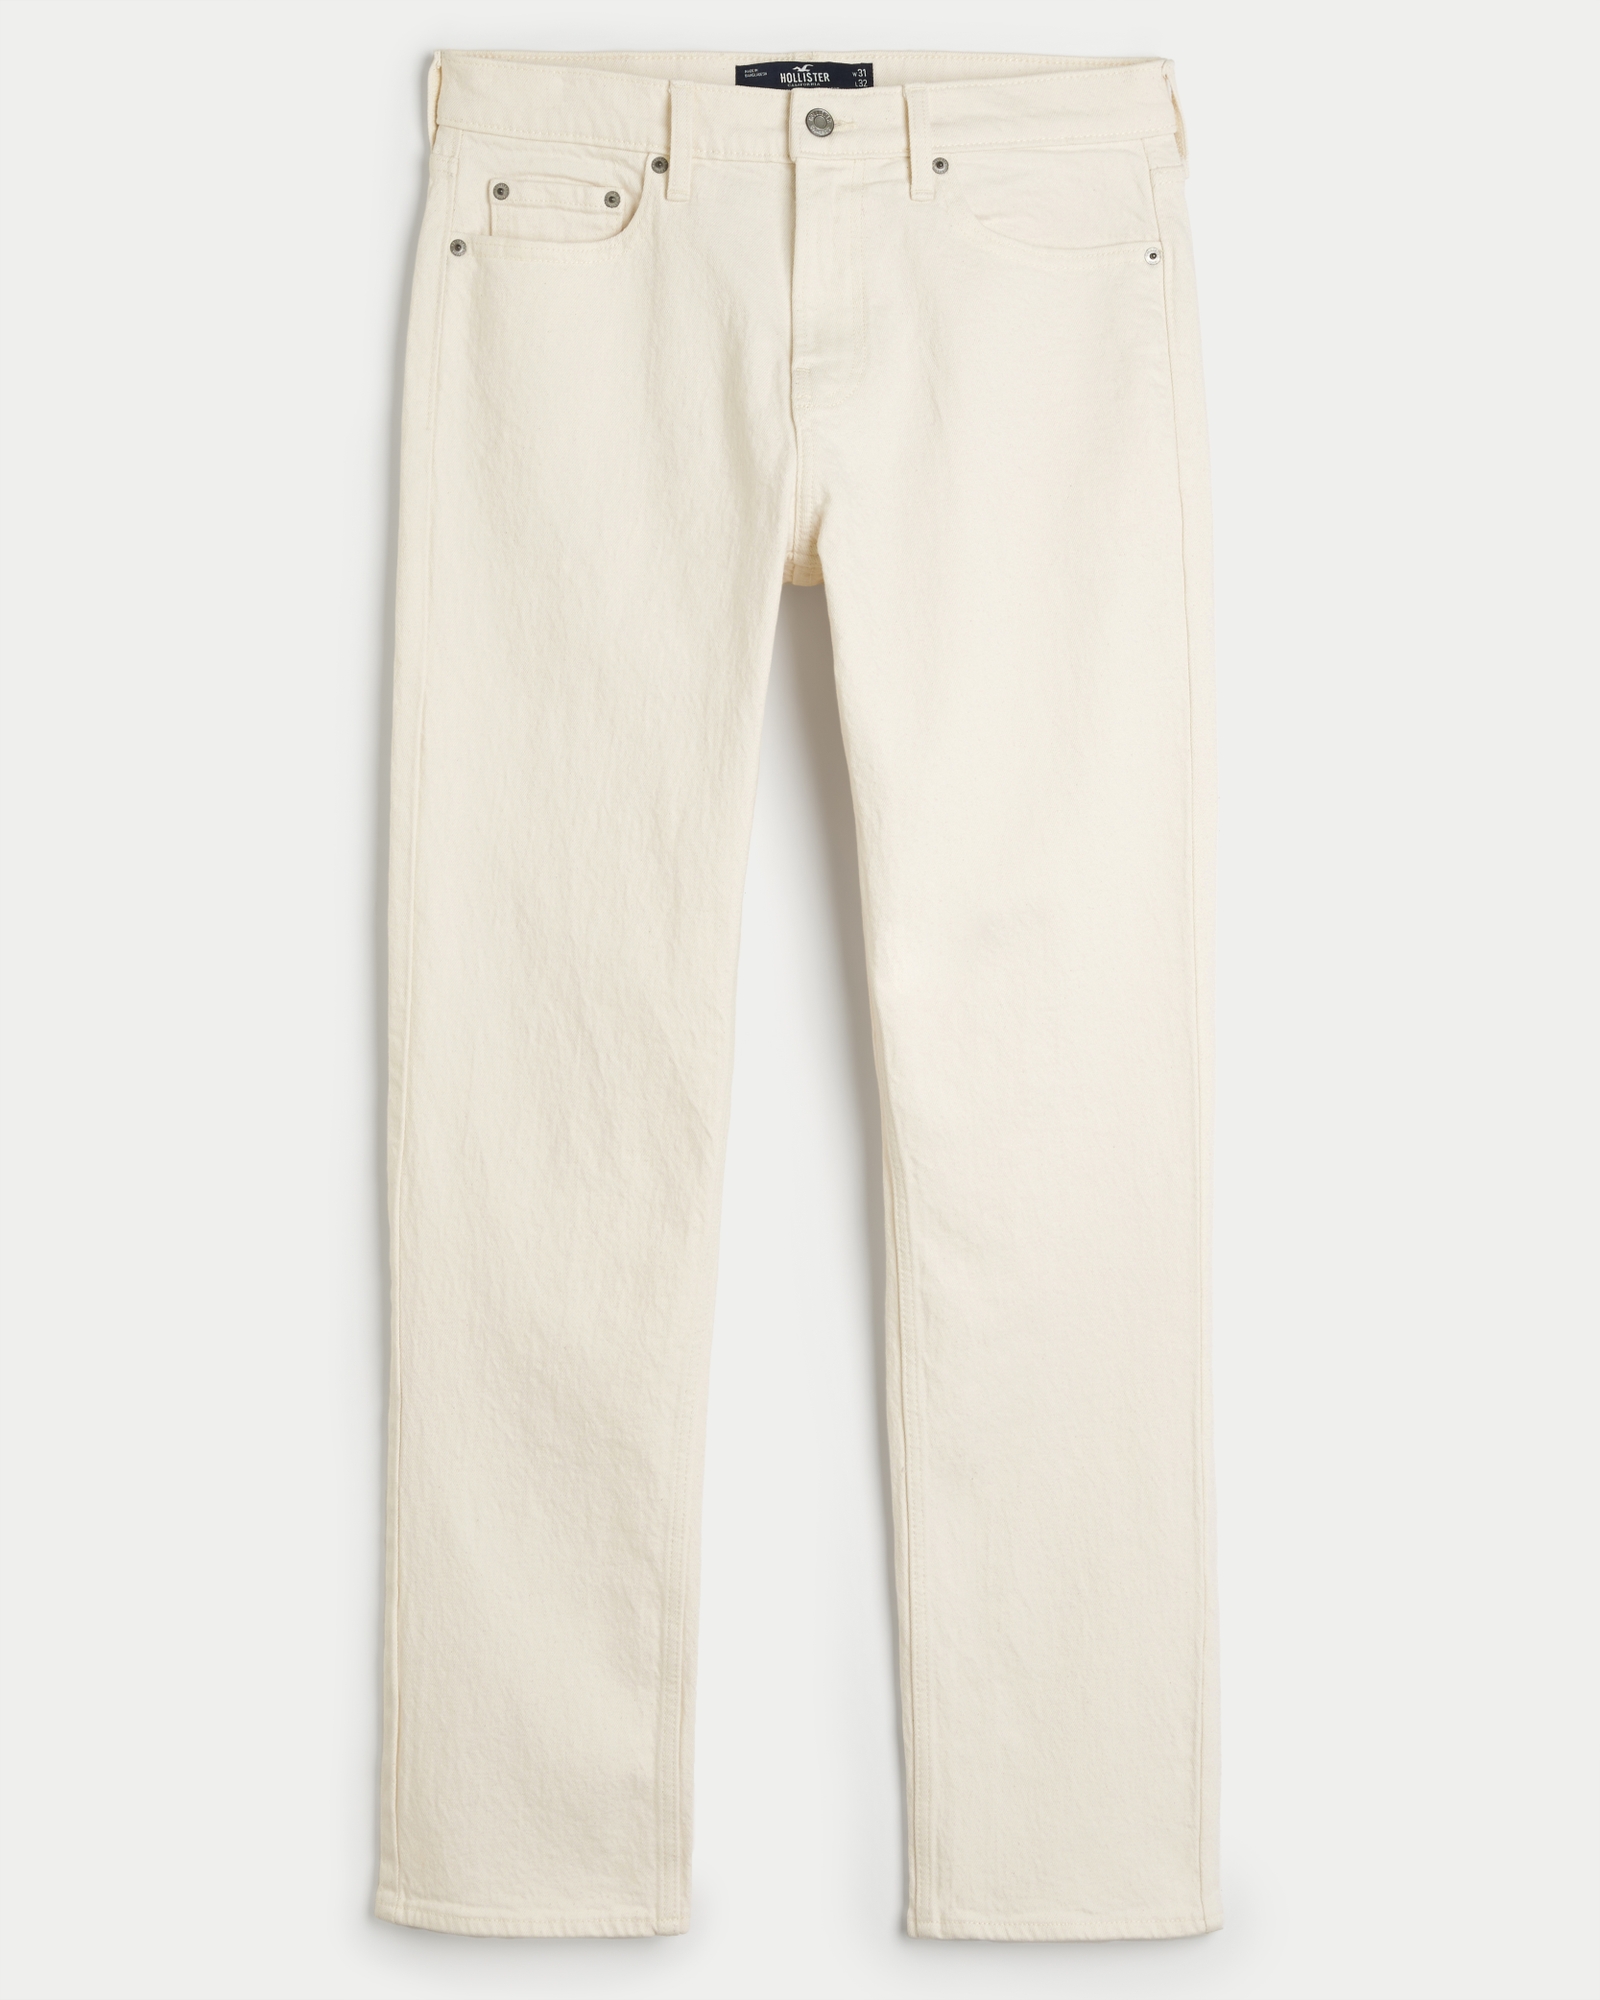 New HOLLISTER Mens W28x28L No Fade Vintage Straight Jeans Ragged Denim  Pants